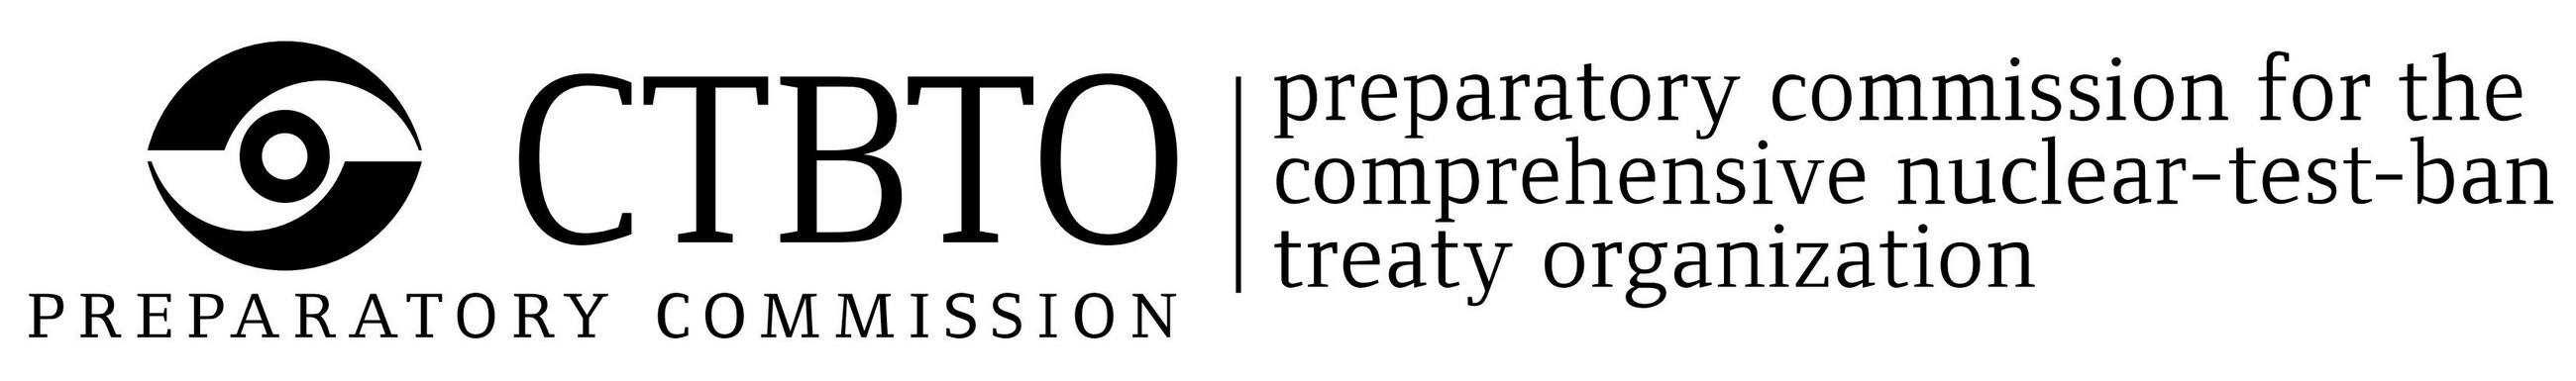 CTBTO Logo   Comprehensive Nuclear Test Ban Treaty Organization png